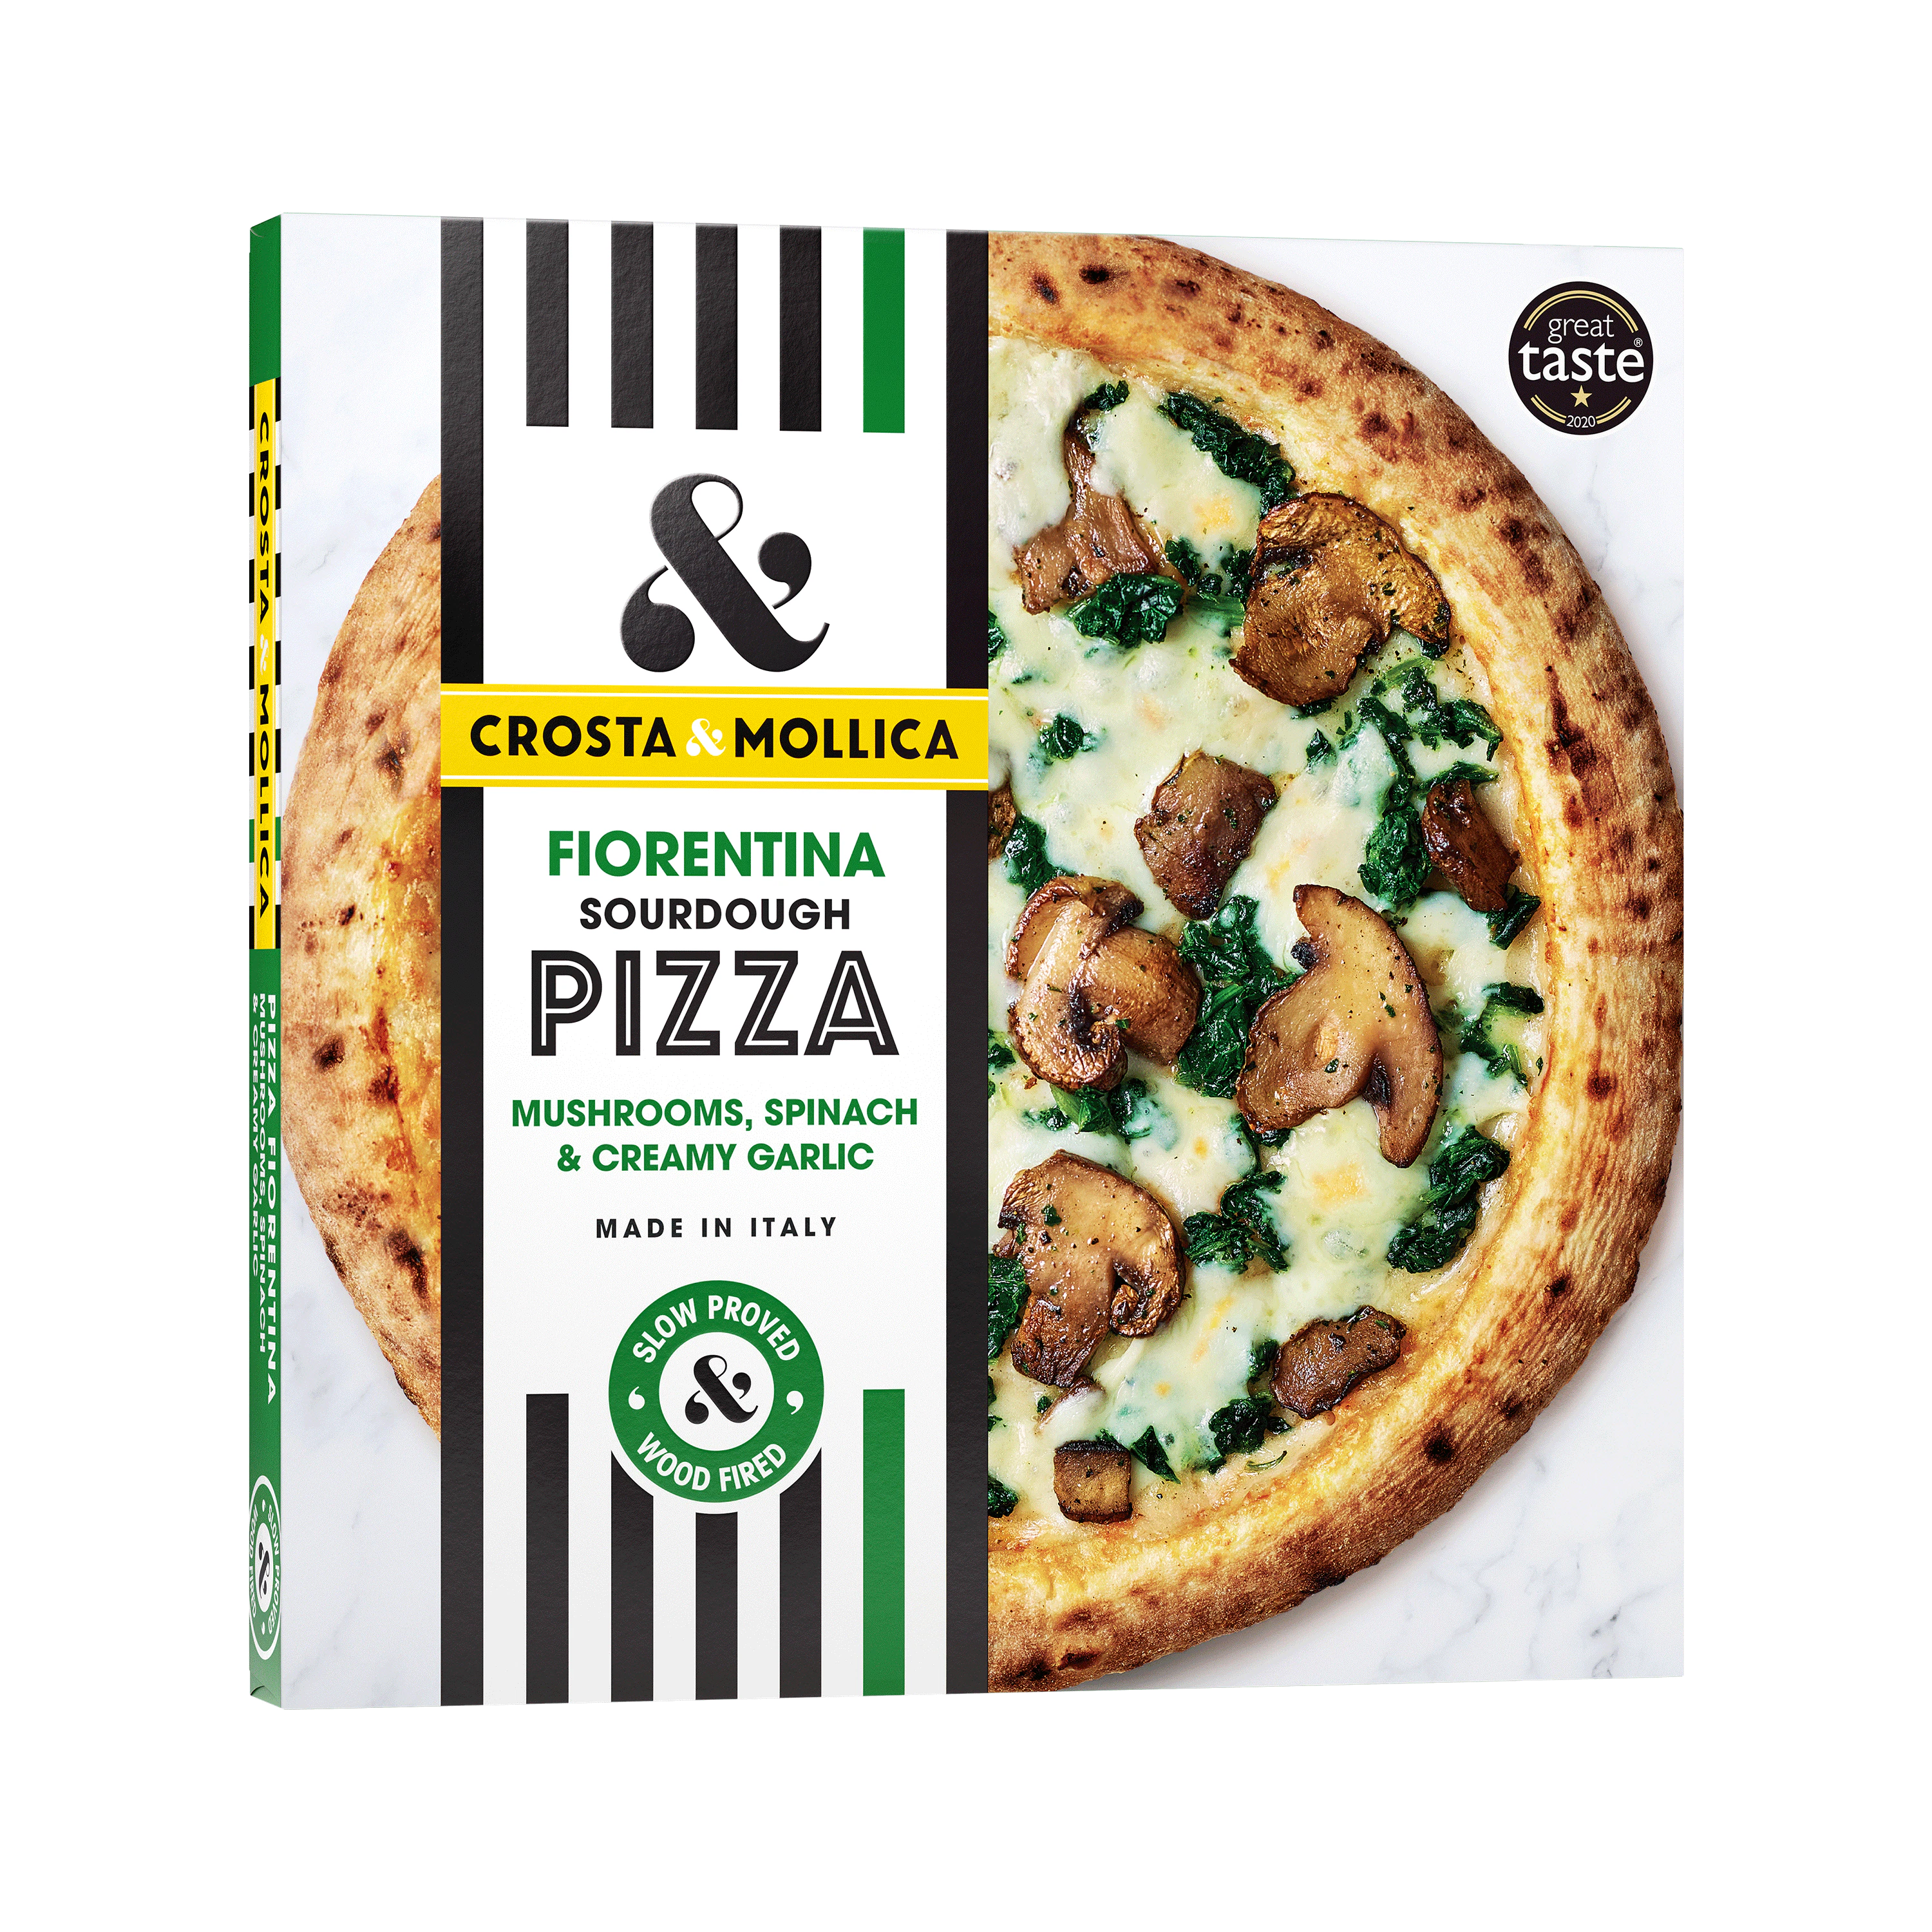 Fiorentina pizza packaging.